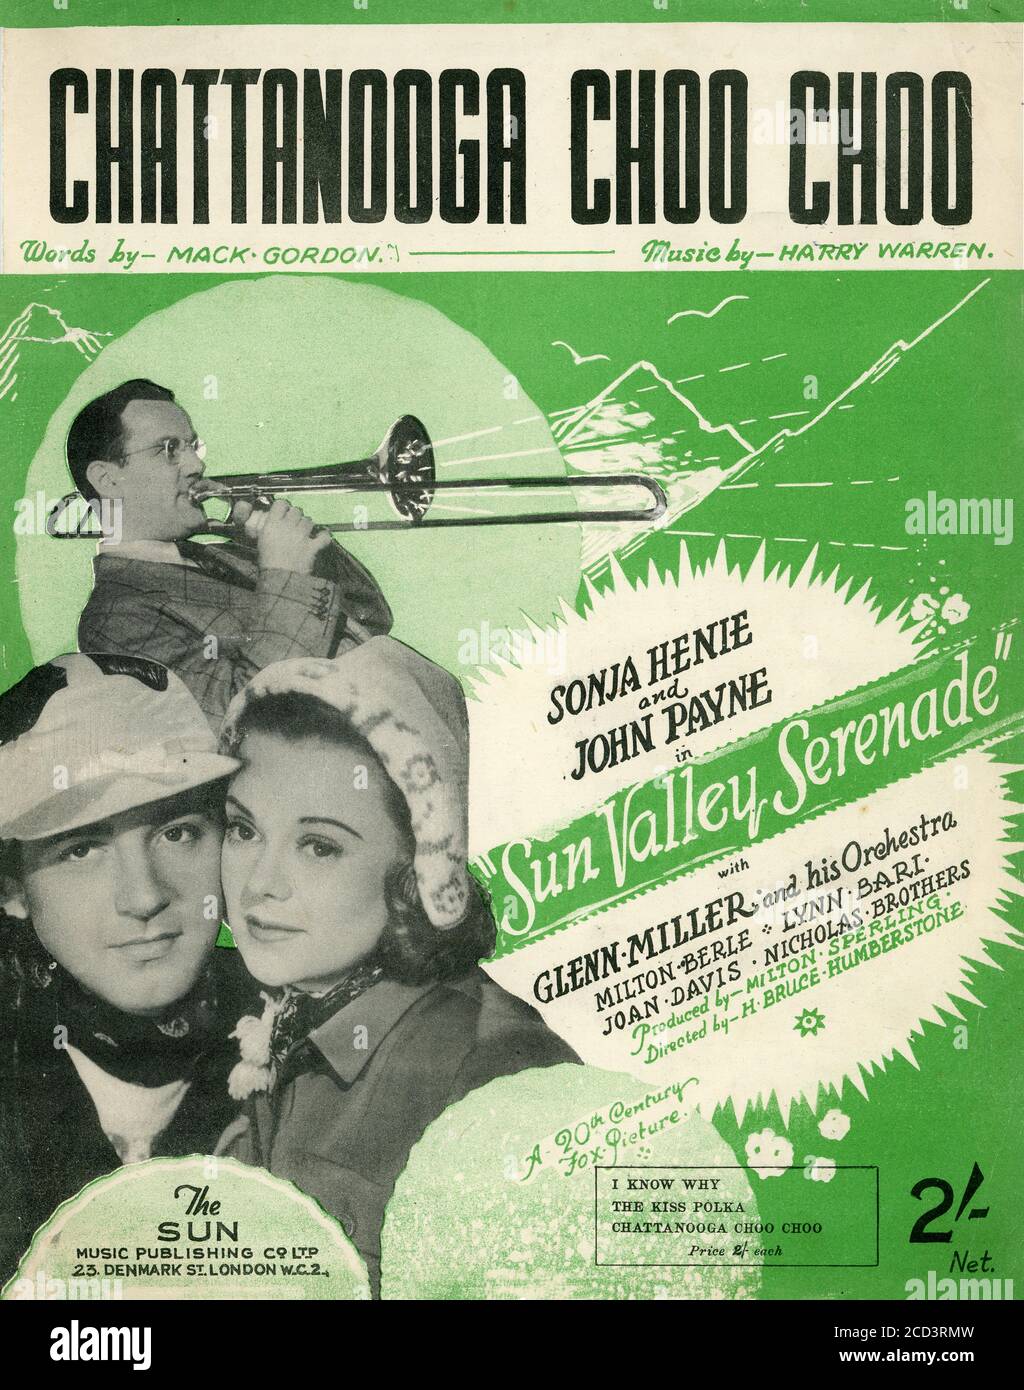 Partituras - Chatanooga Choo Choo - Glenn Miller y. su orquesta - 1941 Foto de stock